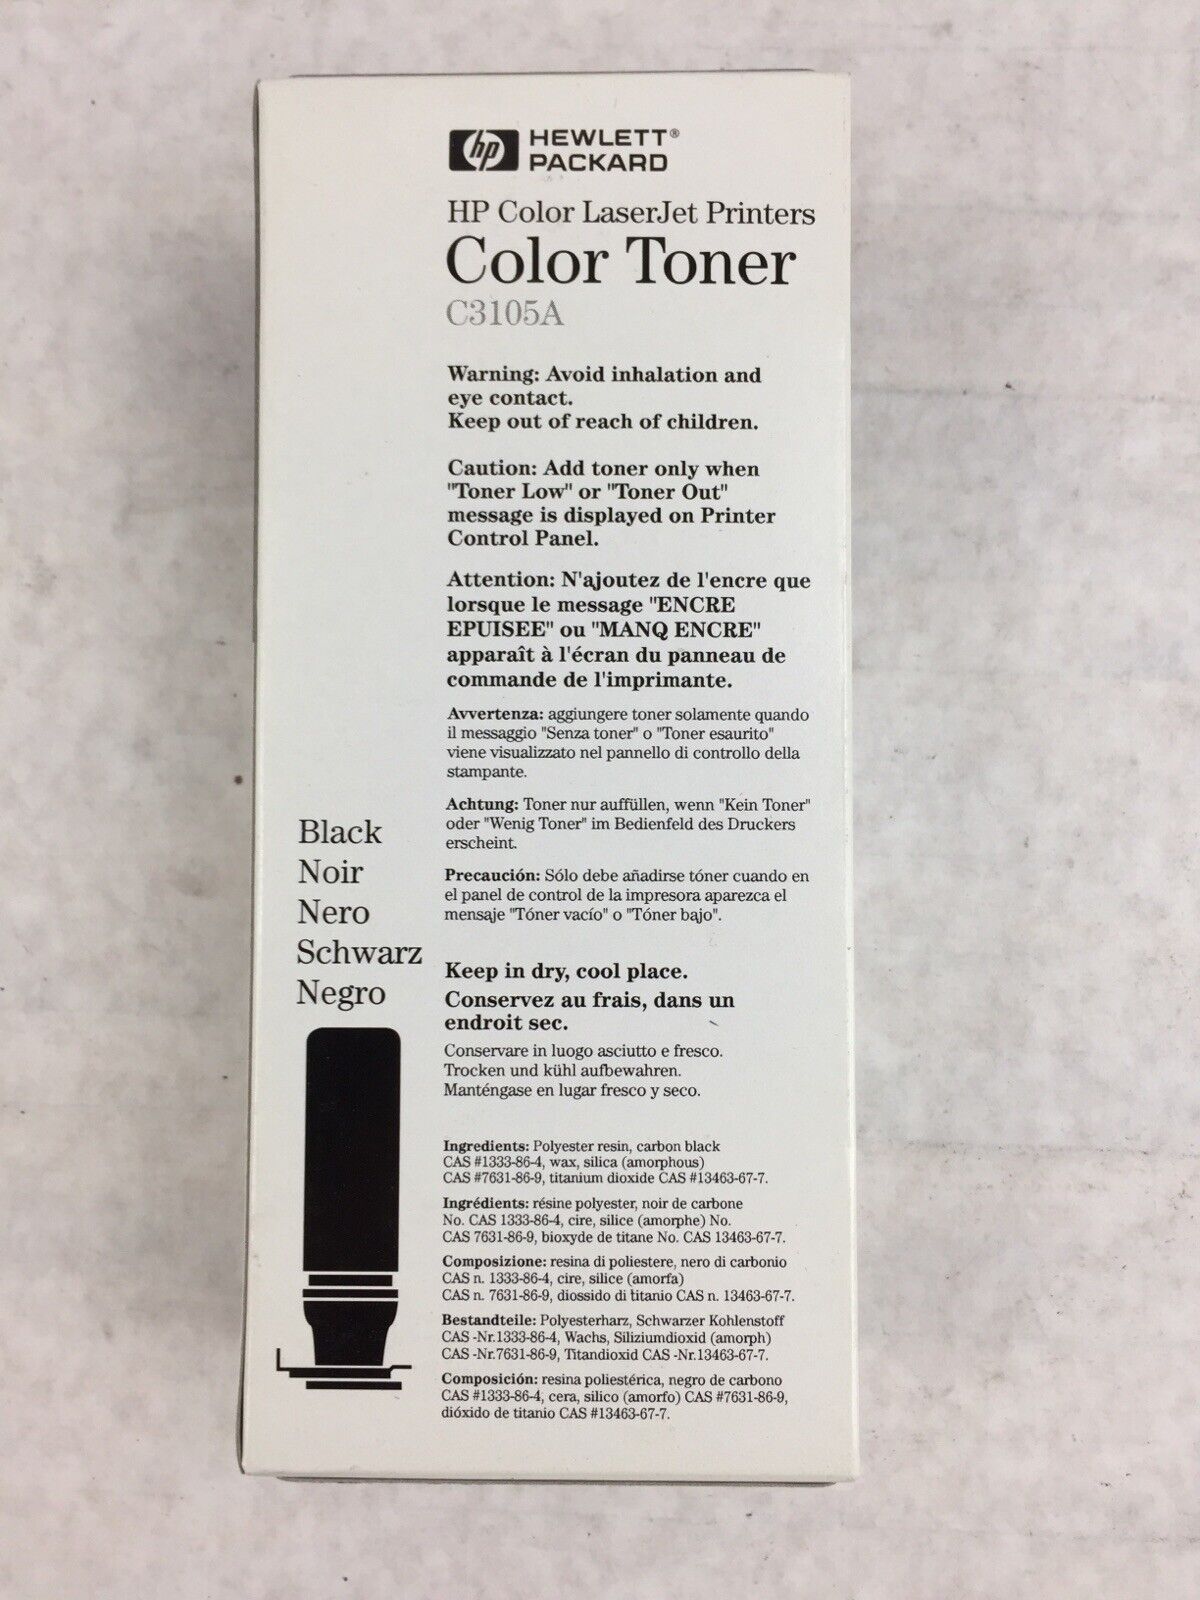 HP Color LaserJet Printers Color Toner C3105A Black Color LaserJet 5(M)